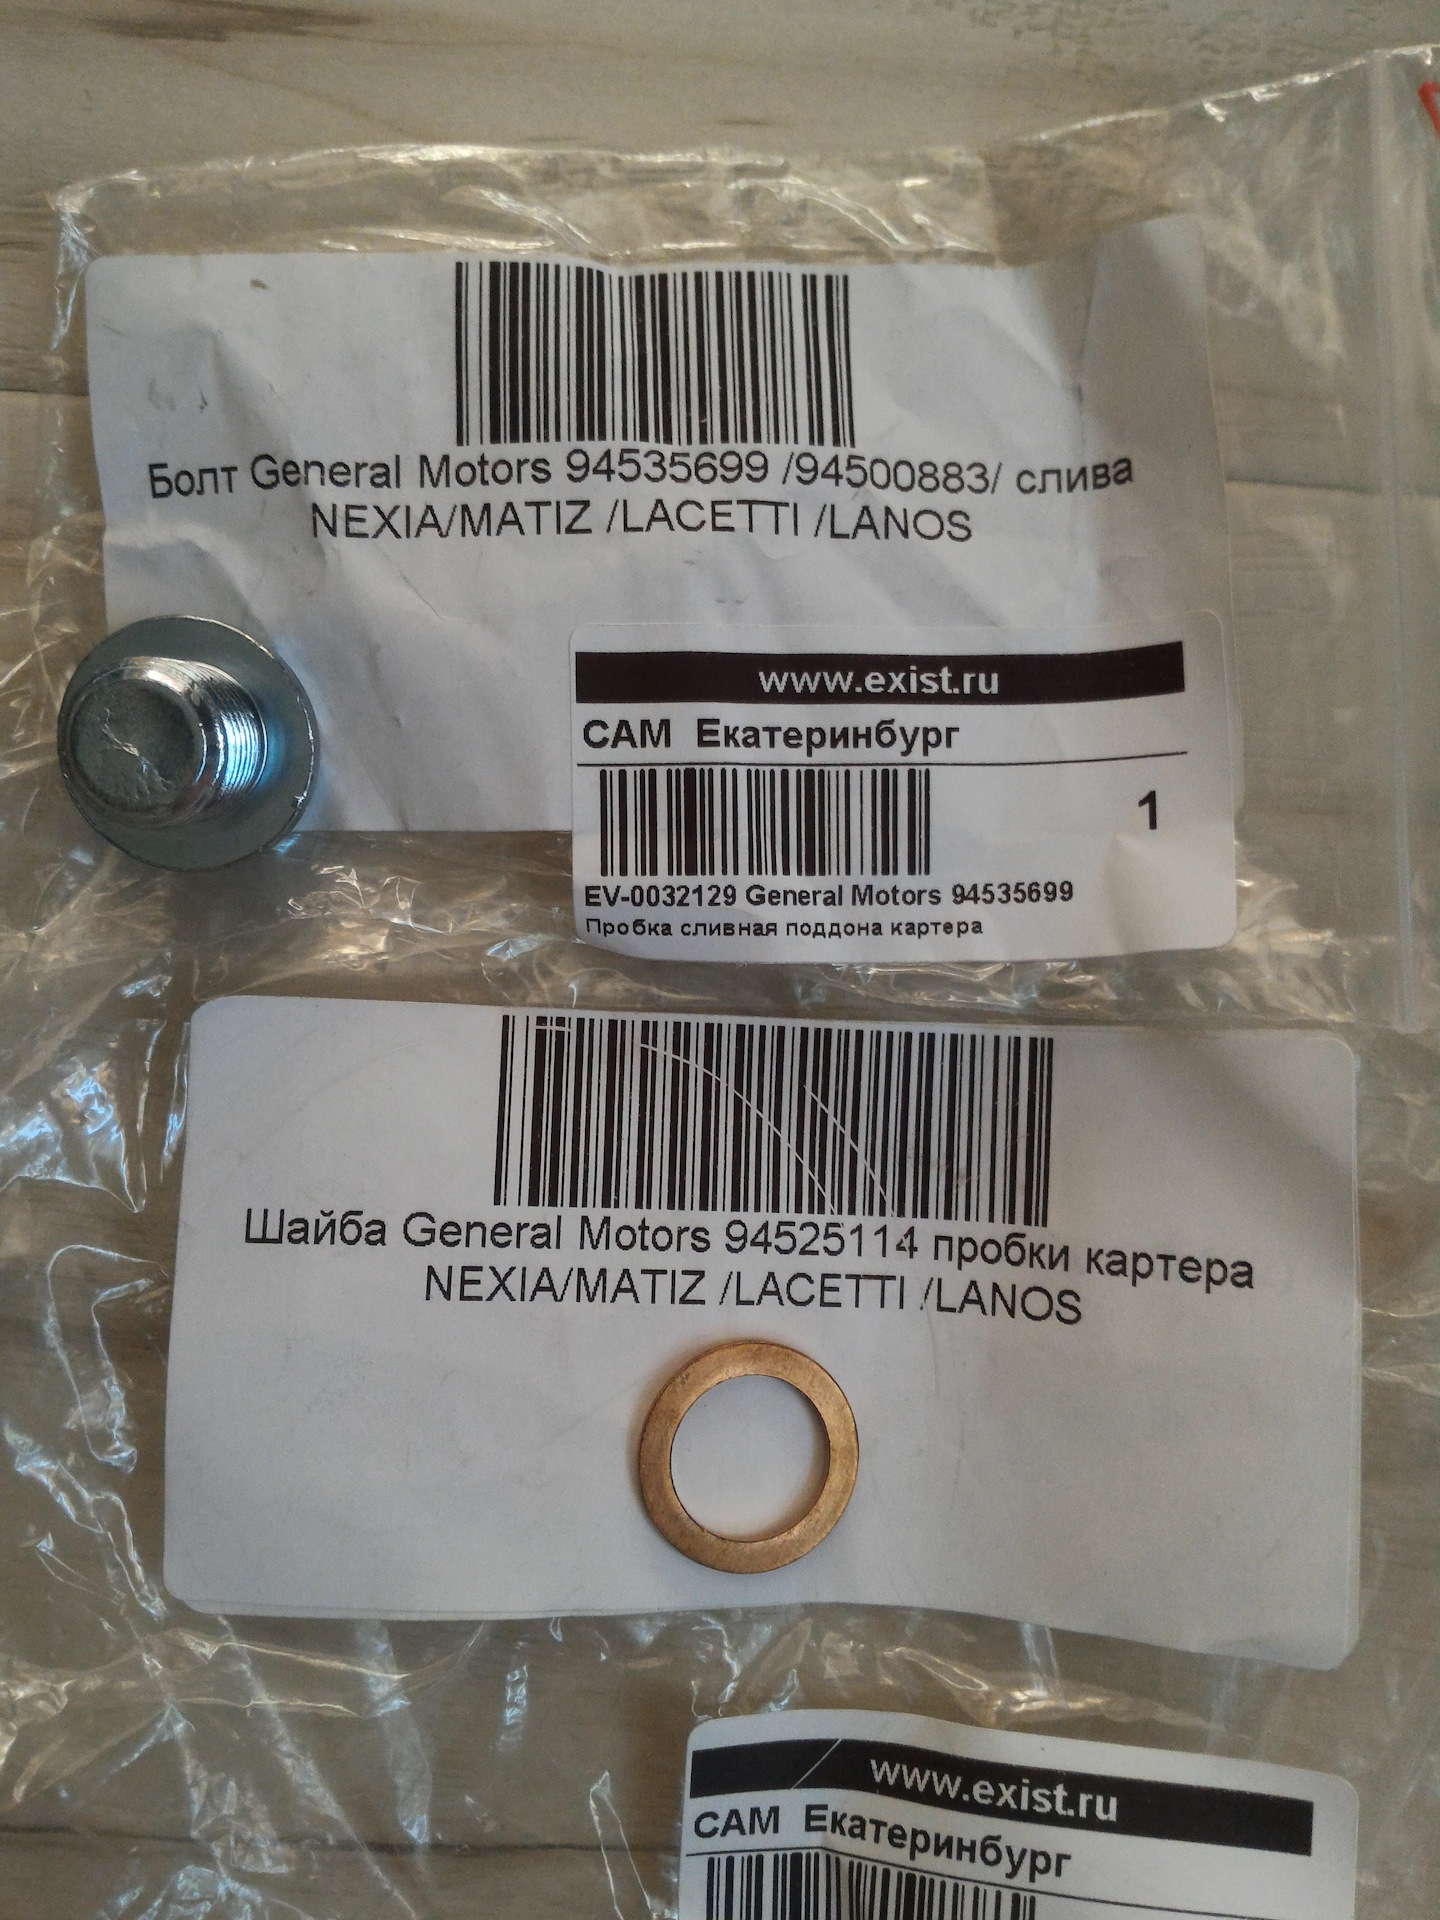 Кольцо пробки картера Nexia, espero, lanos (GM) 94525114/916014003